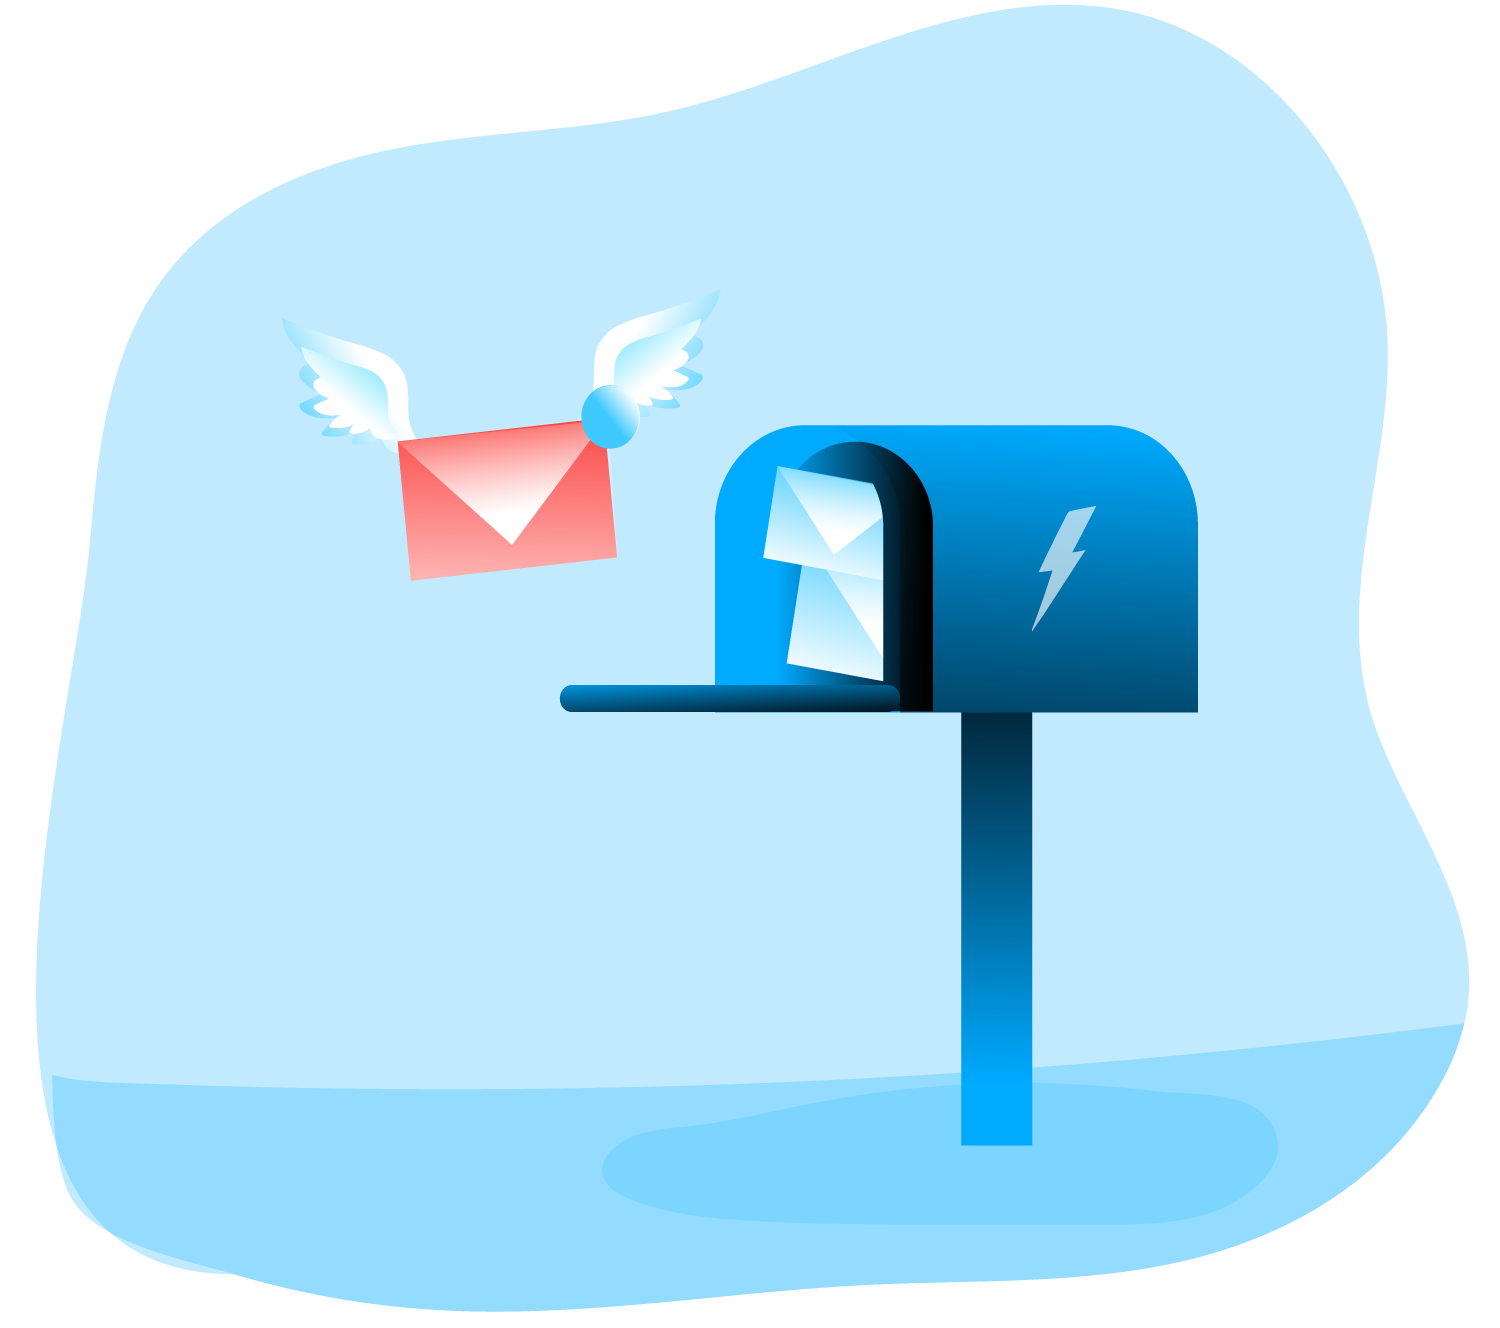 Mailbox illustration with flying envelope